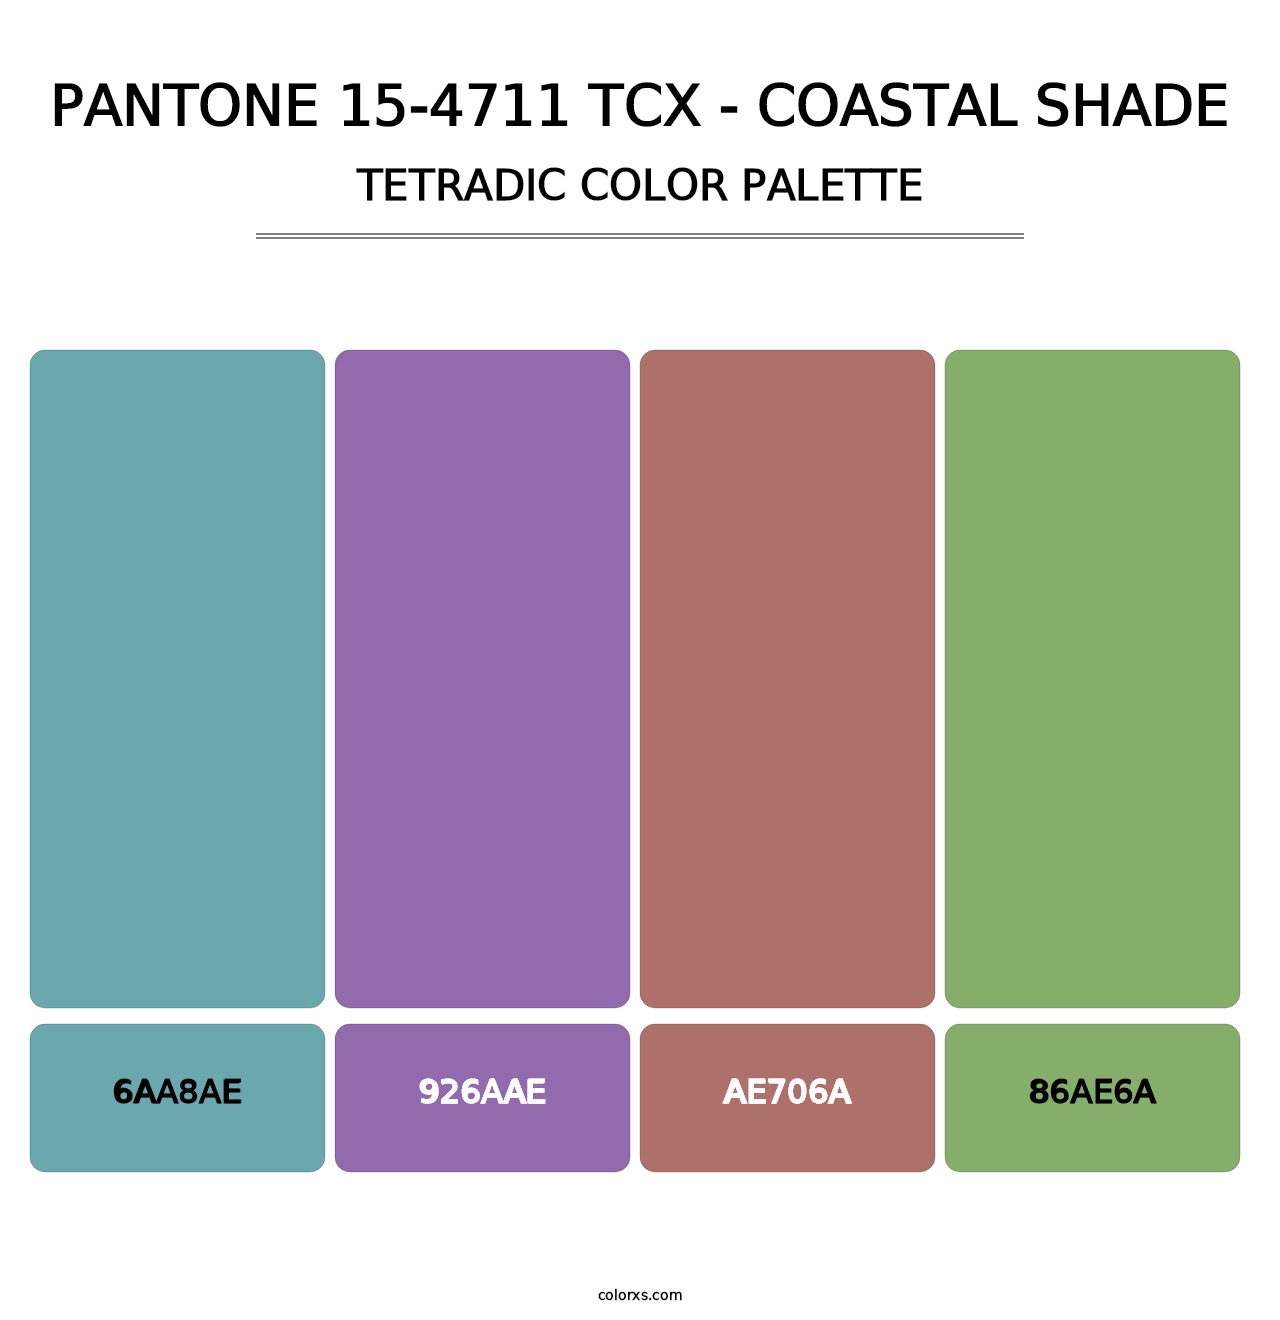 PANTONE 15-4711 TCX - Coastal Shade - Tetradic Color Palette